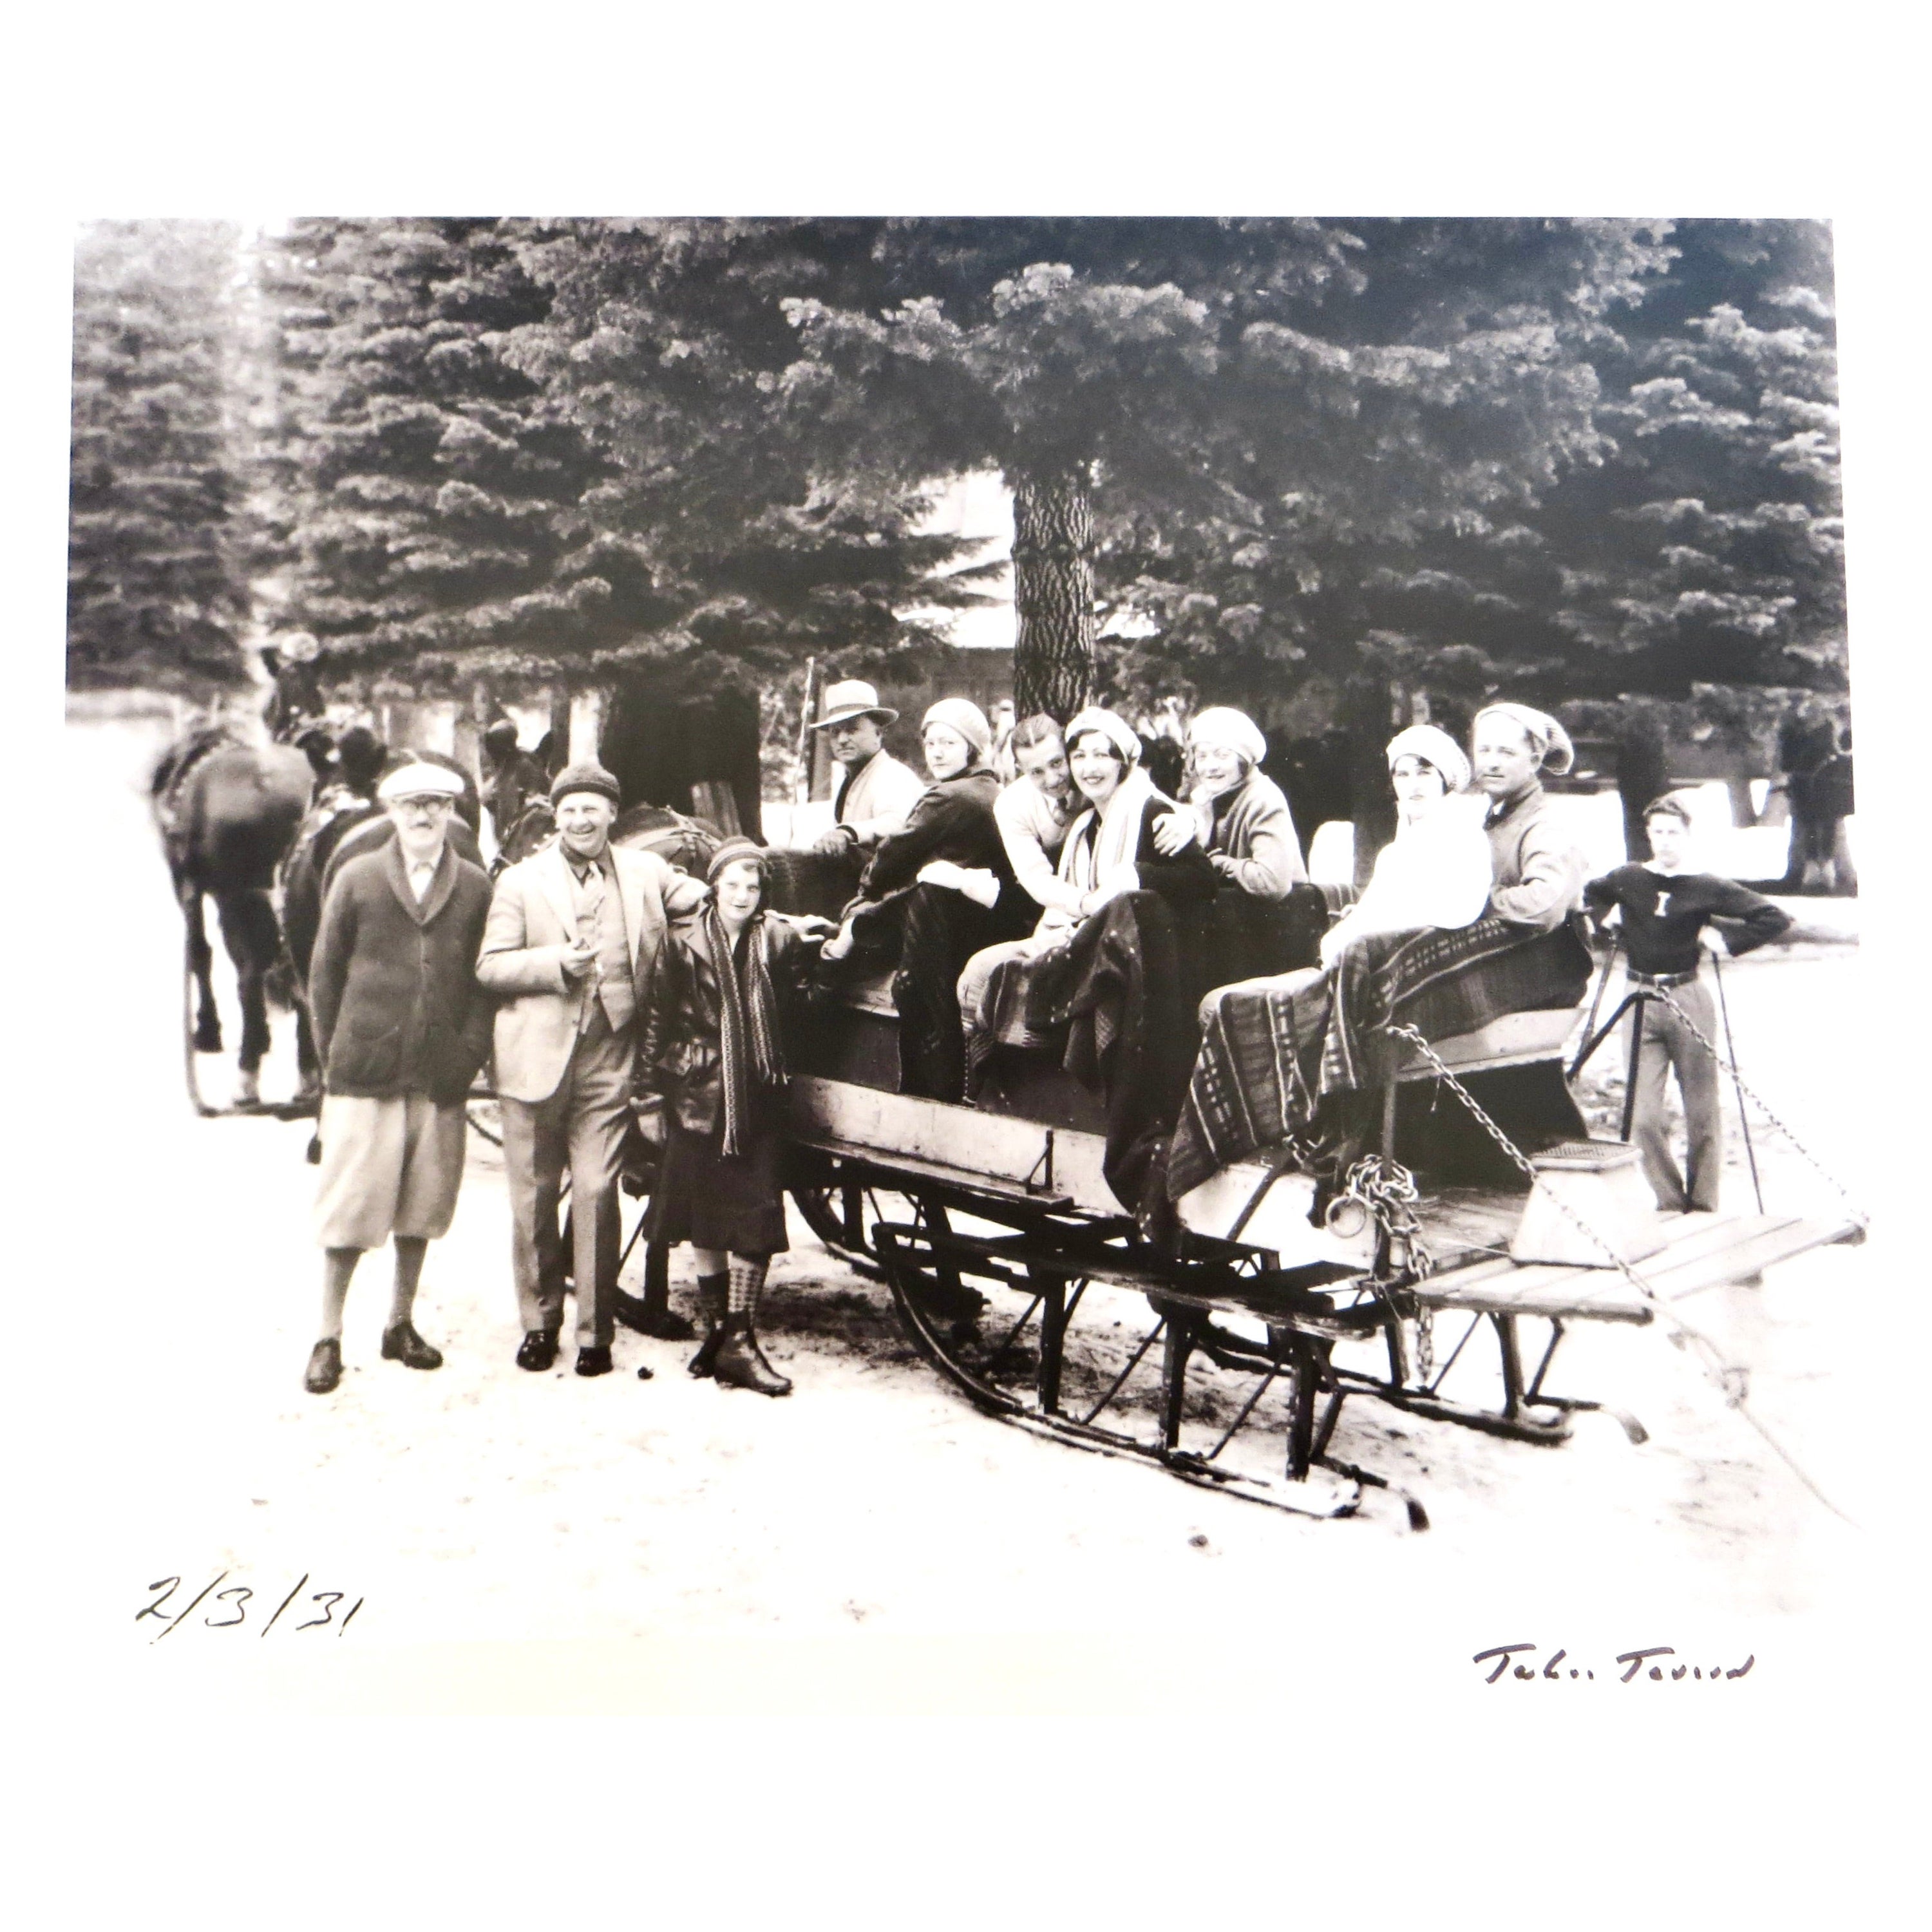 Original Vintage Photo; The Lake Tahoe Area "Group of People Sledding" Date 1931